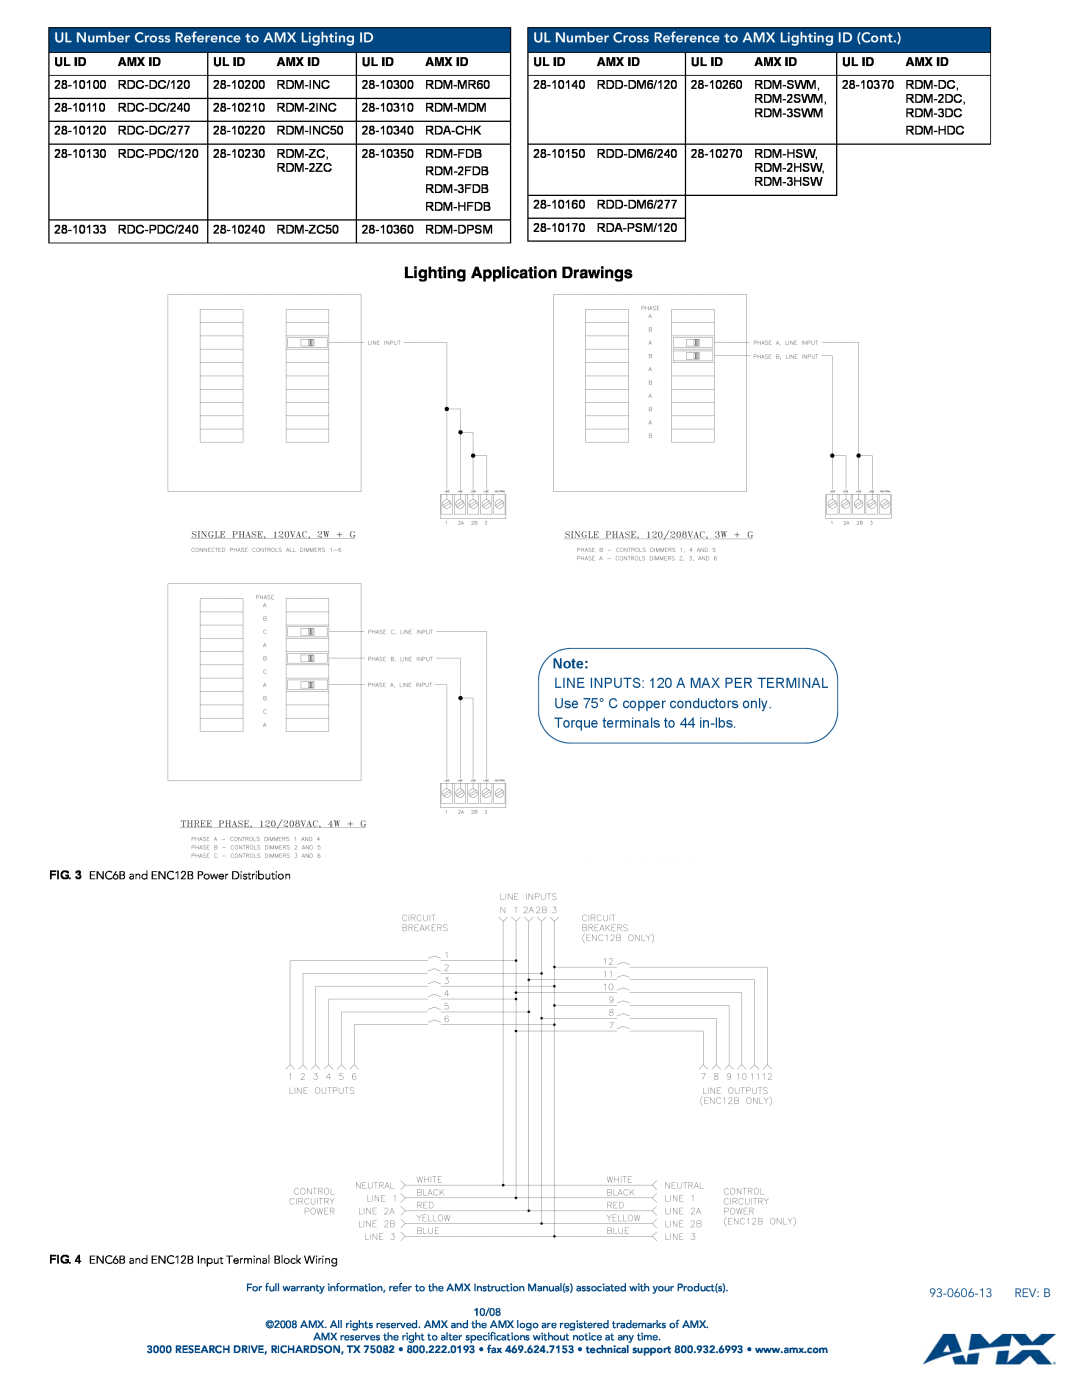 AMX ENC12B, RDA-ENC6B Lighting Application Drawings, UL Number Cross Reference to AMX Lighting ID, Ul Id, Amx Id 